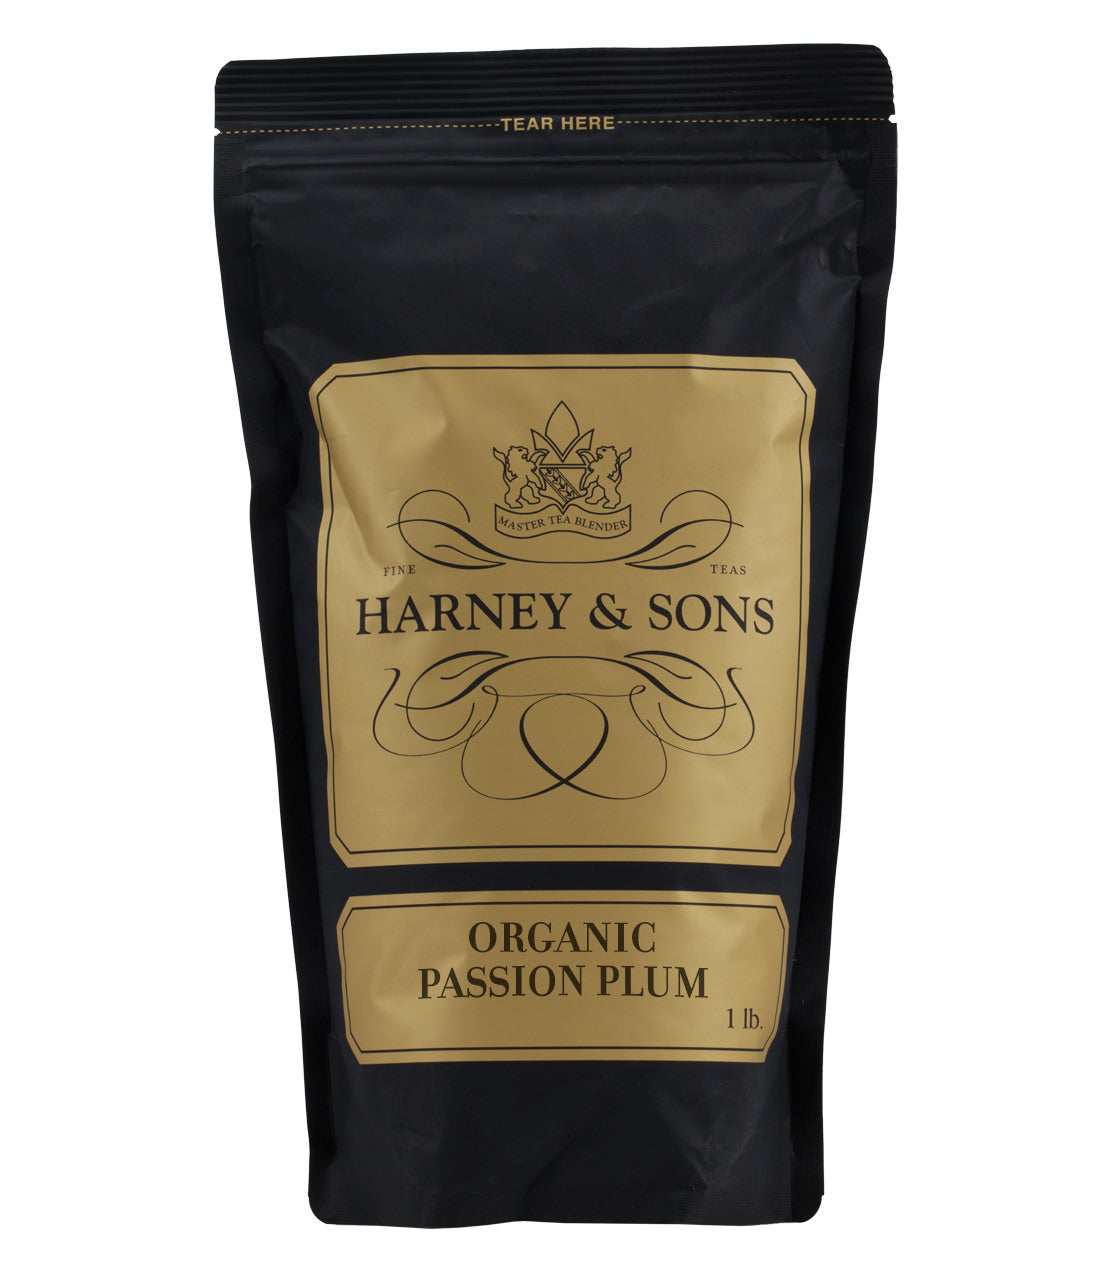 Organic Passion Plum - Loose 1 lb. Bag - Harney & Sons Fine Teas